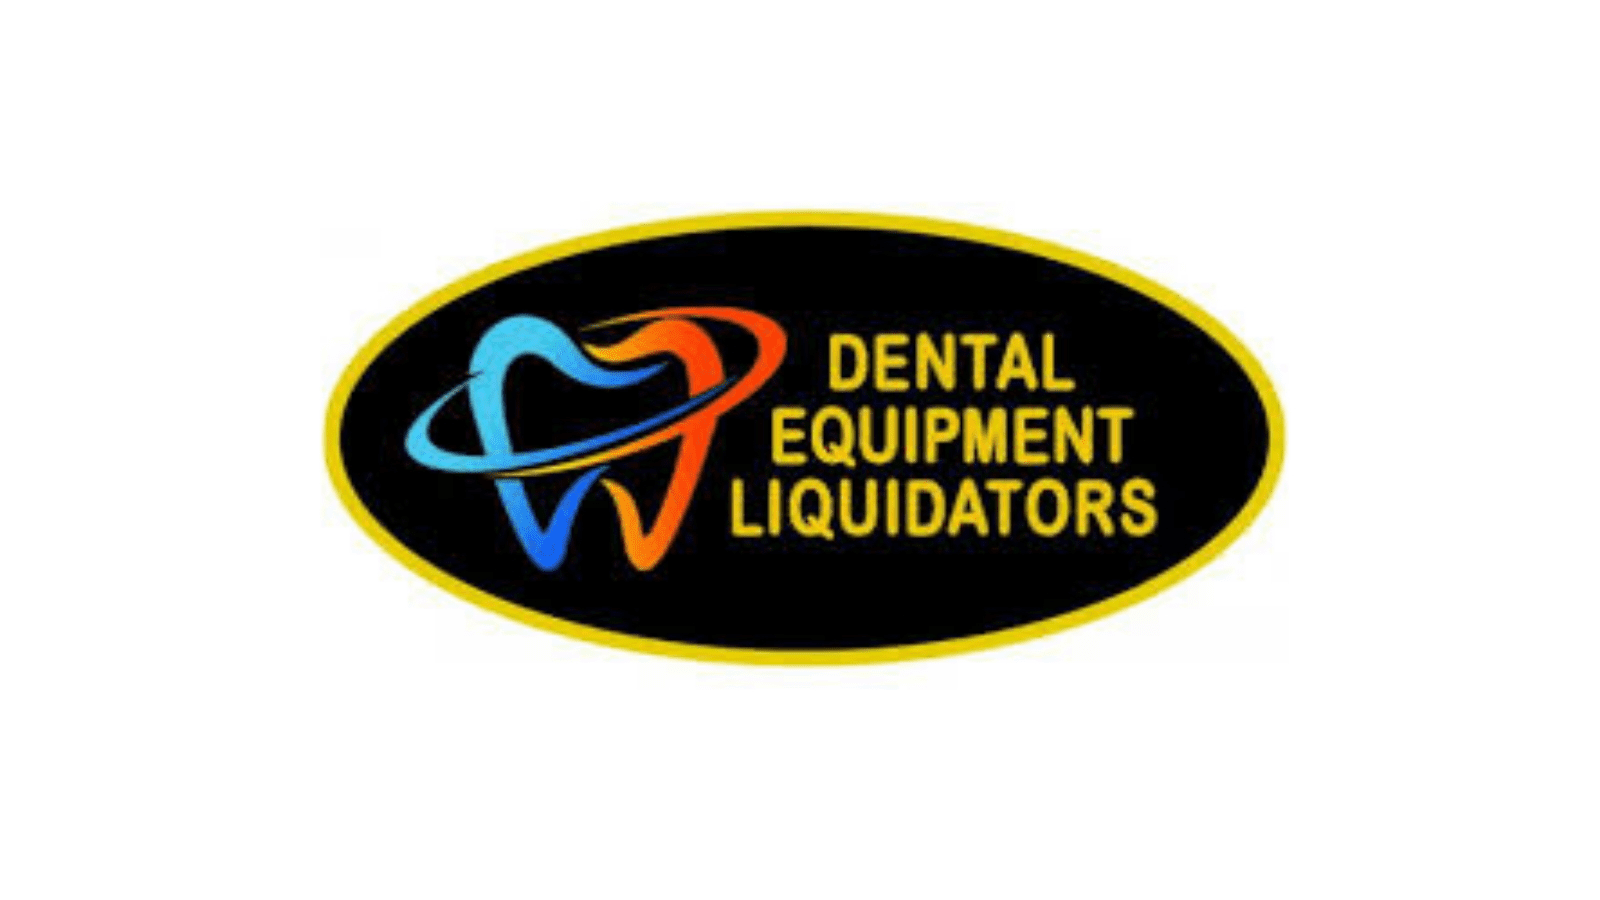 Dental equipment liquidators